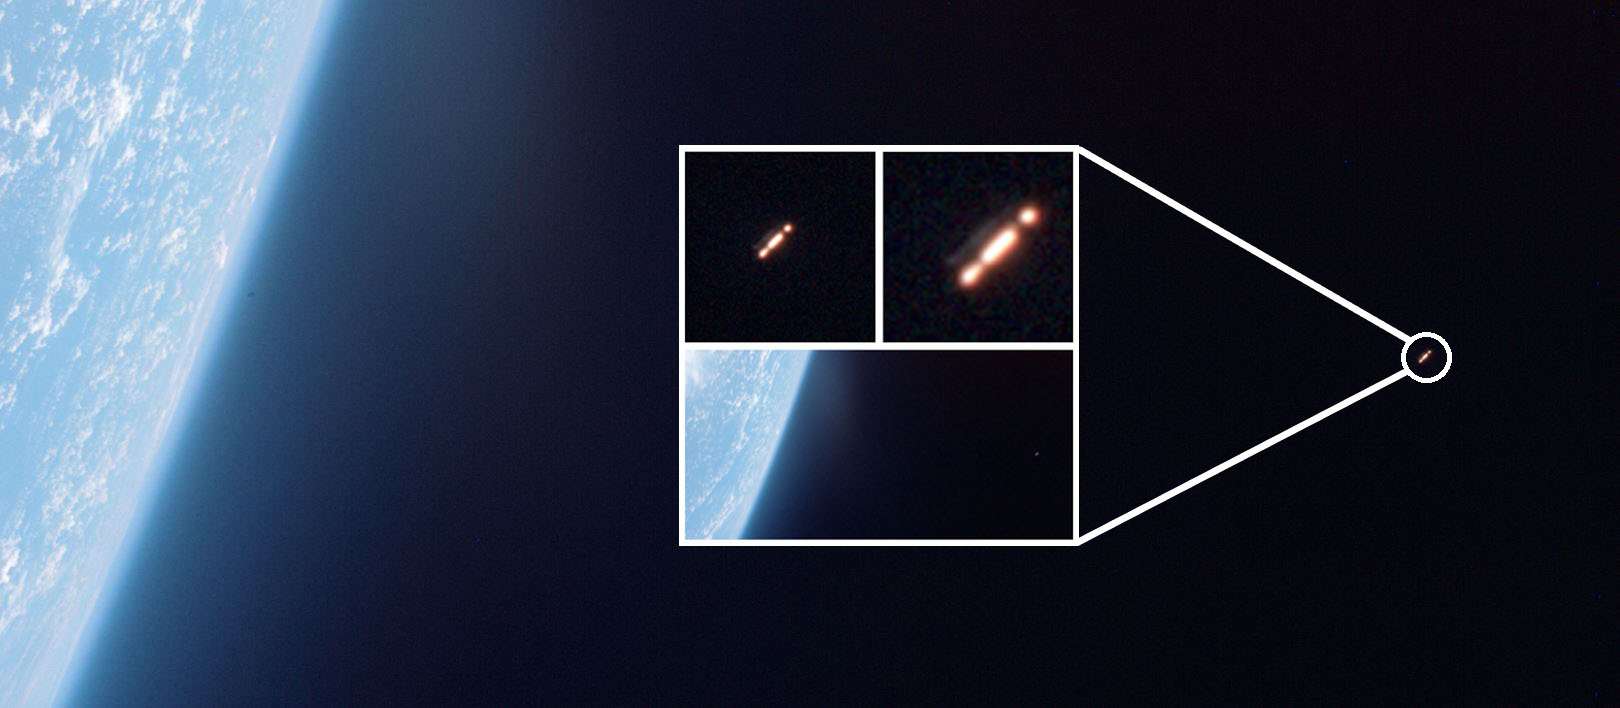 Gemini-X-alien-UFO - Official NASA Gemini mission image shows ‘undeniable proof’ of UFO’s orbiting Earth